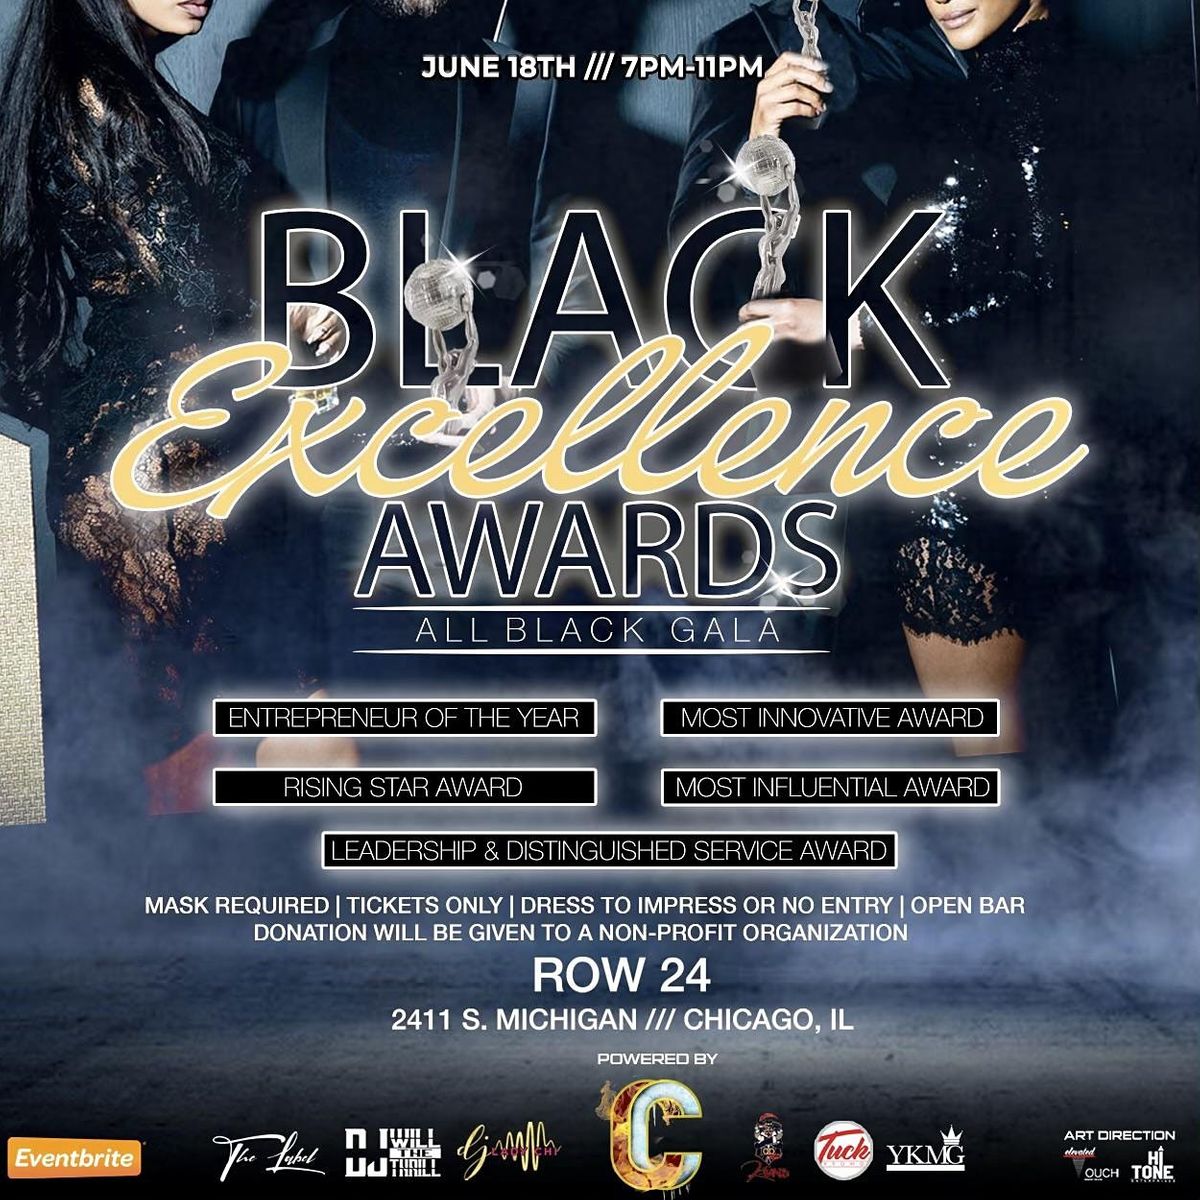 BLACK EXCELLENCE AWARDS: ALL BLACK GALA